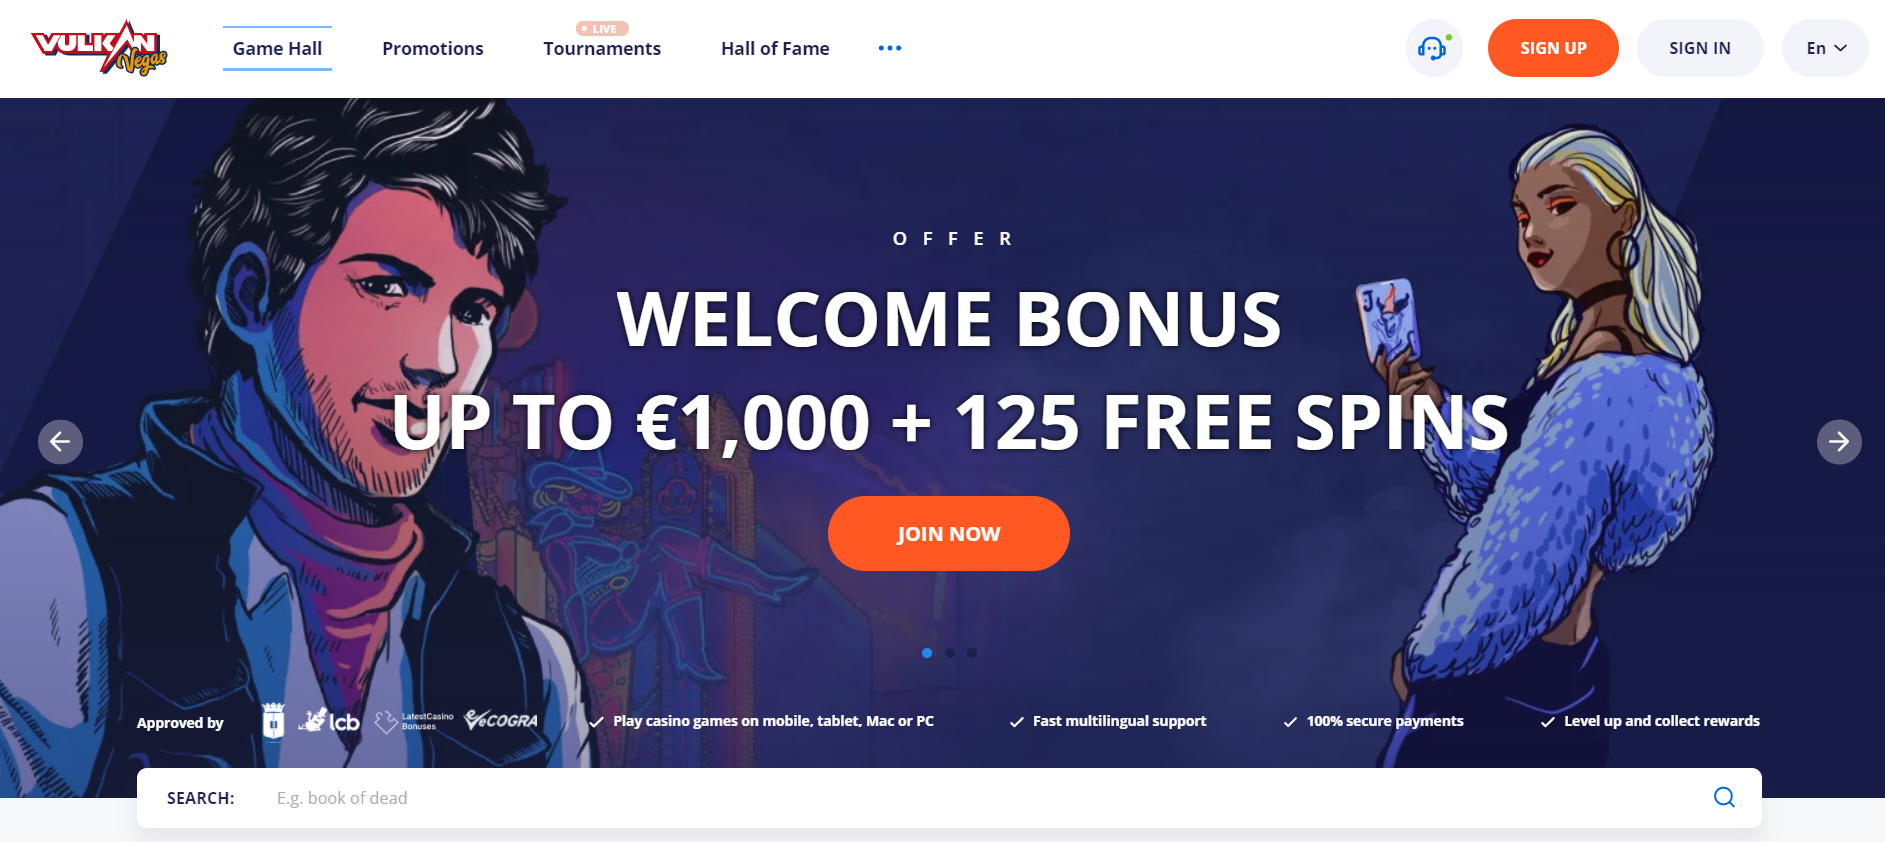 Vulkanvegas casino 100% bonus up to 500 EUR   WFCasino